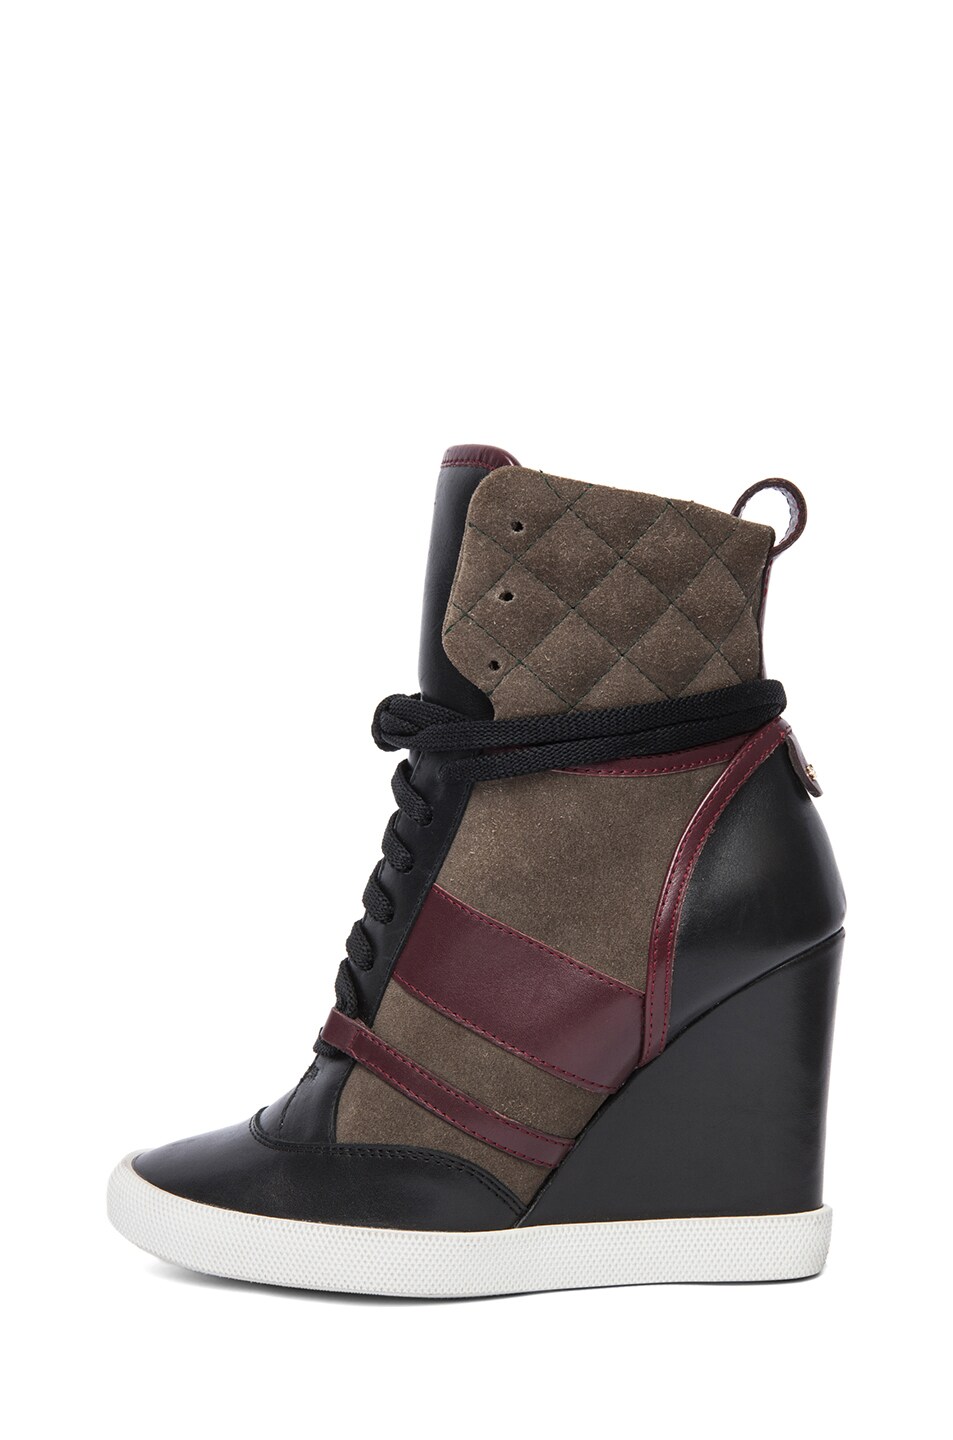 Image 1 of Chloe Leather & Suede Sneaker Wedges in Green & Black & Bordeaux